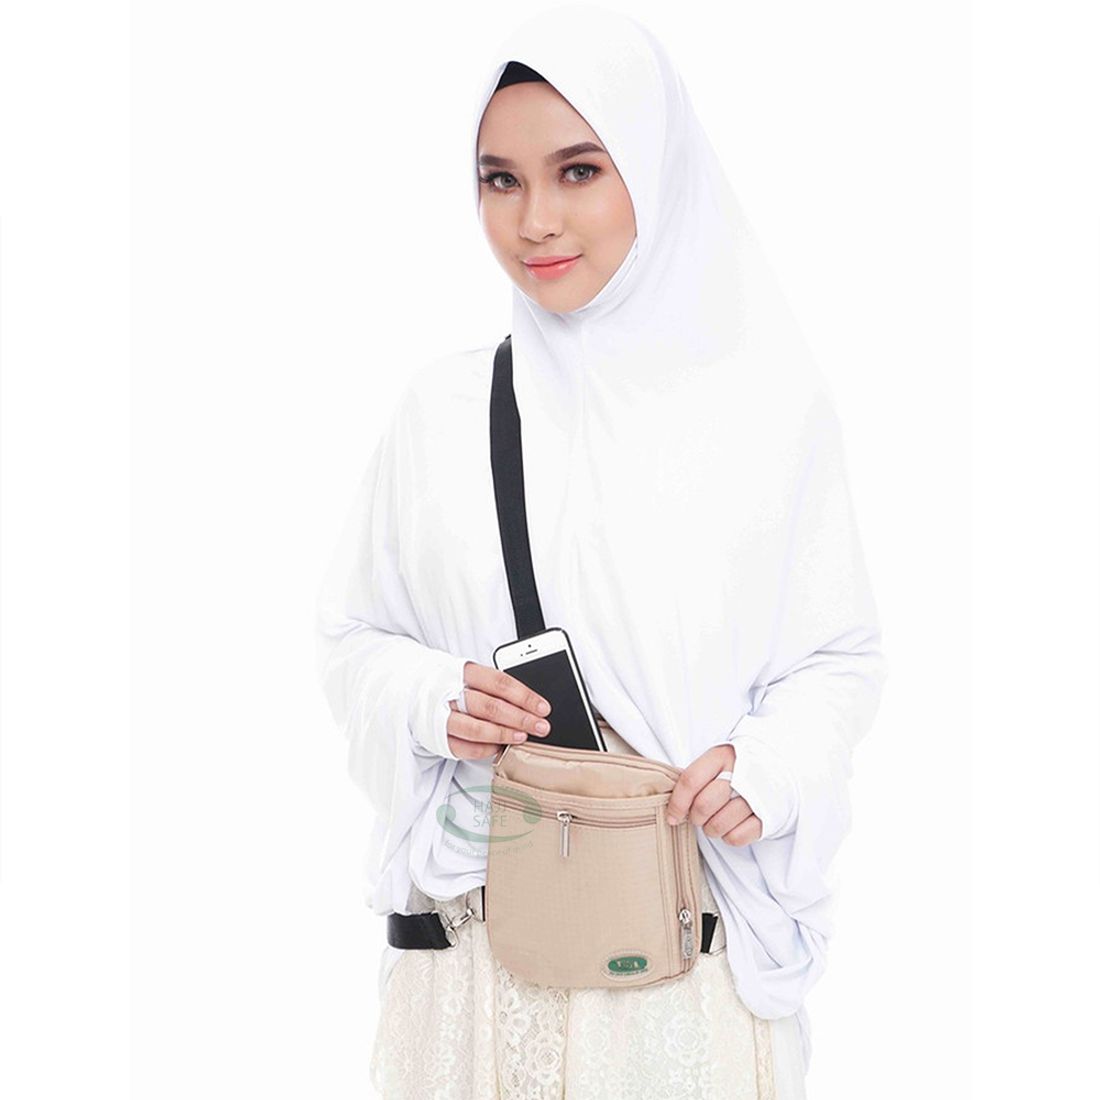 Hajj Safe™ Hajj & Umrah – Anti-Theft Secure Side Bag & Neck Bag